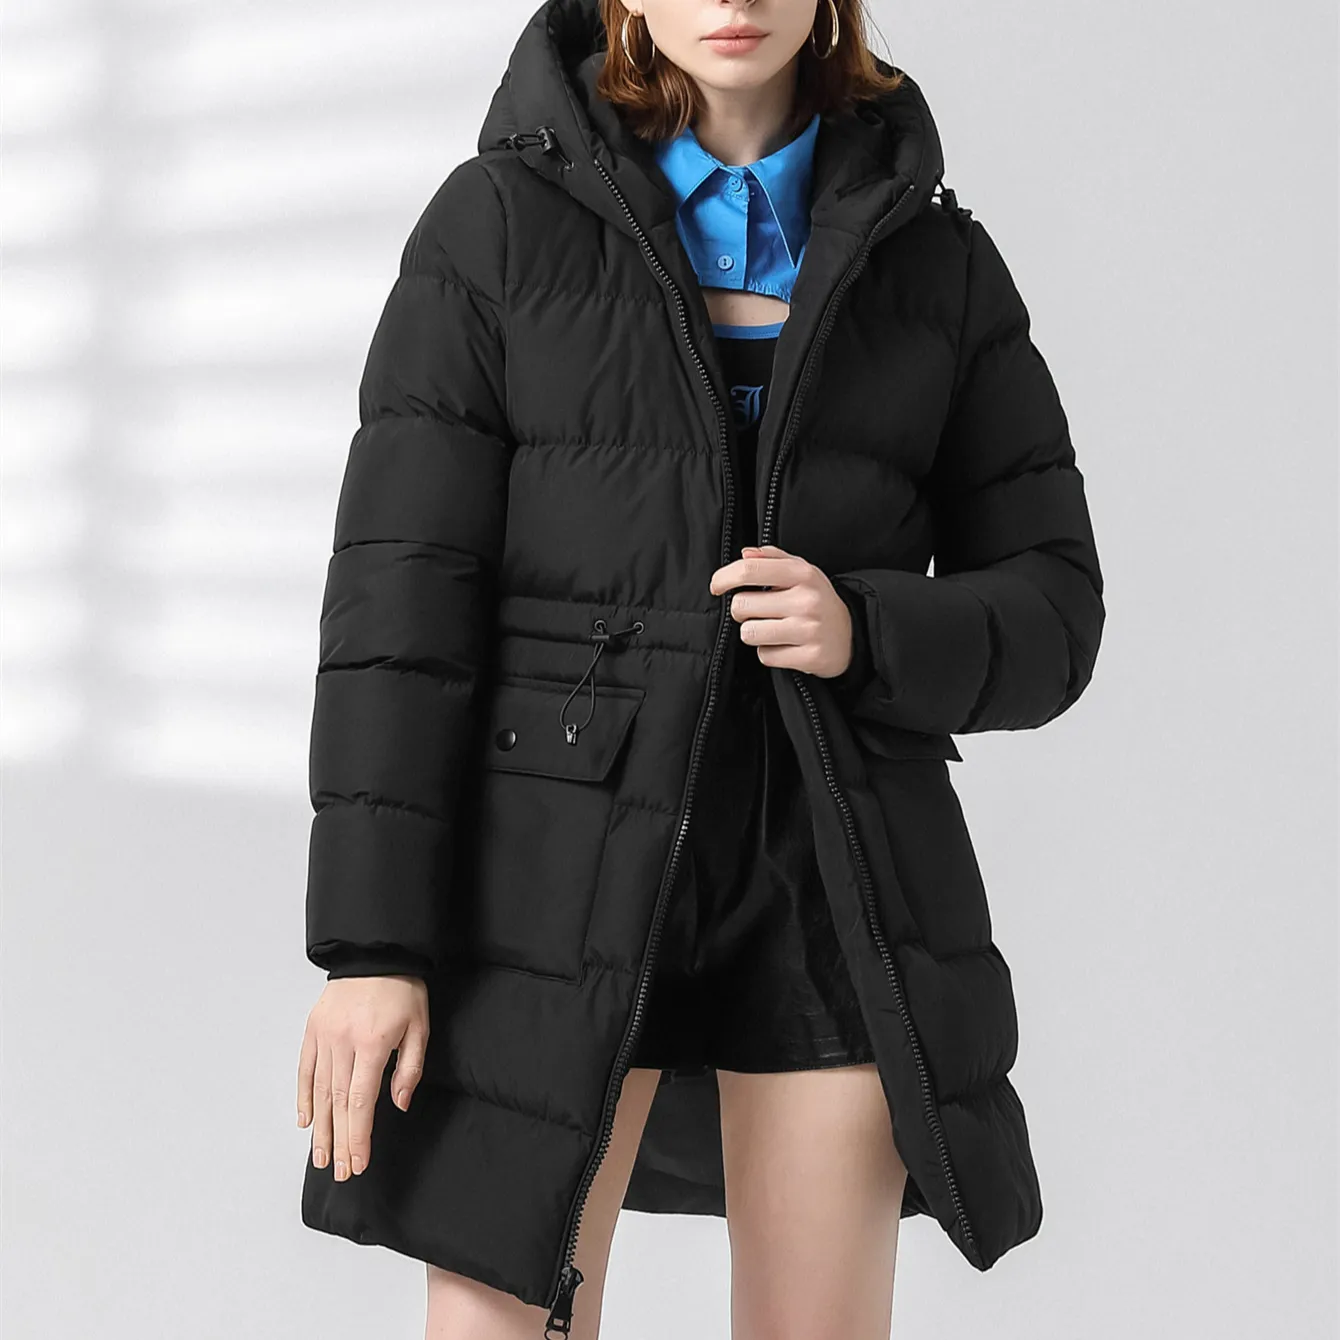 Winter Female Down Jacket Women's Warm Fashion Mid-Length Down Coat Puffy Windproof Puffer Coat